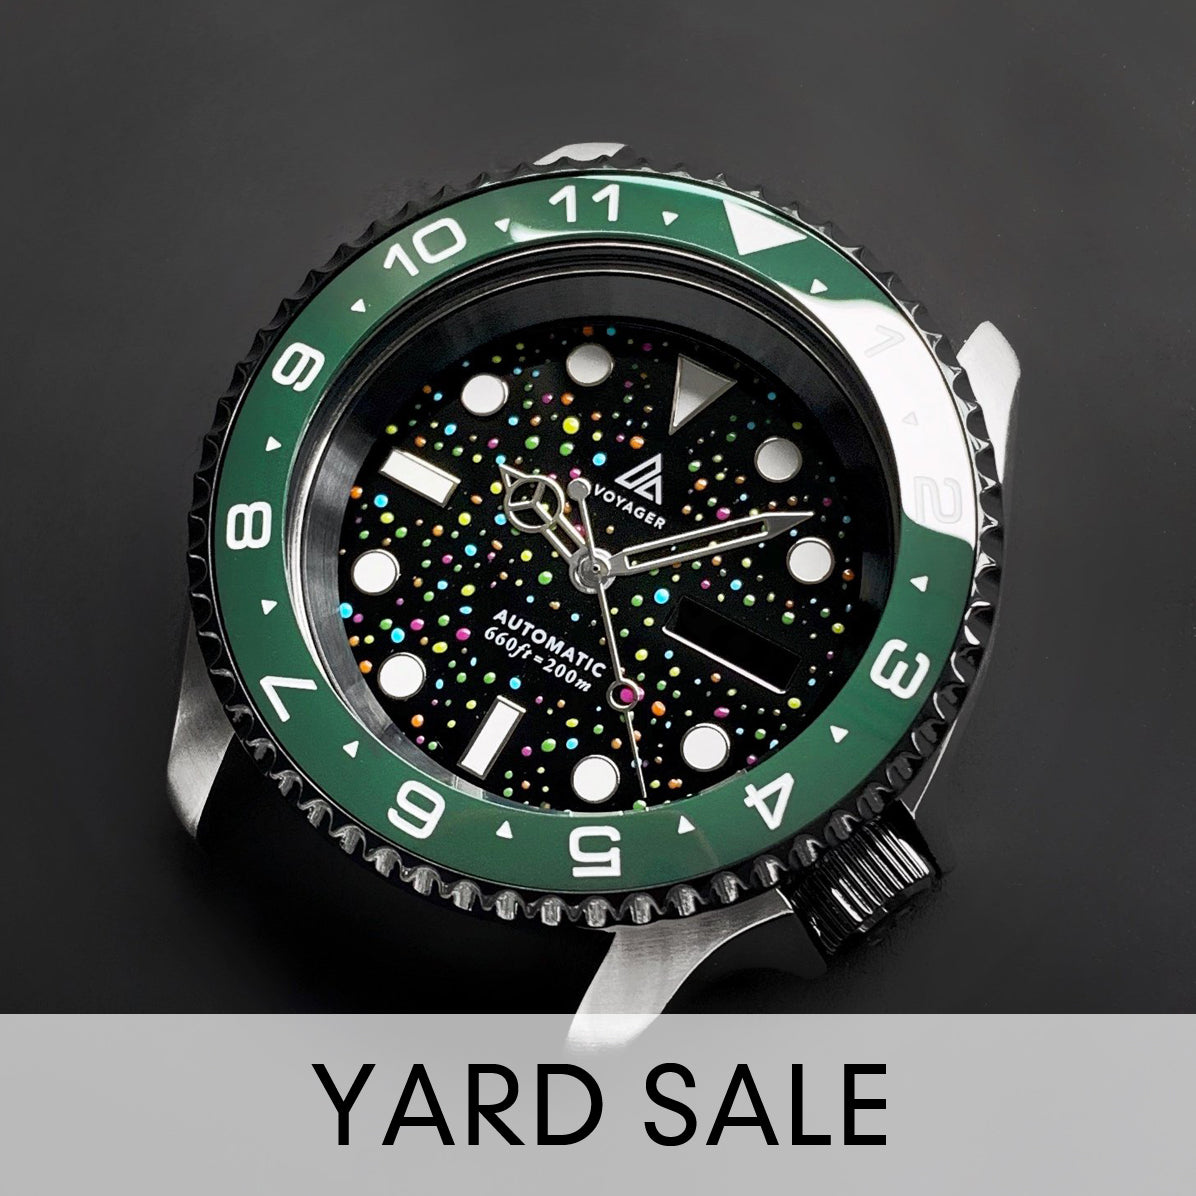 YARD SALE - Ceramic Insert - 007 Dual Time Green